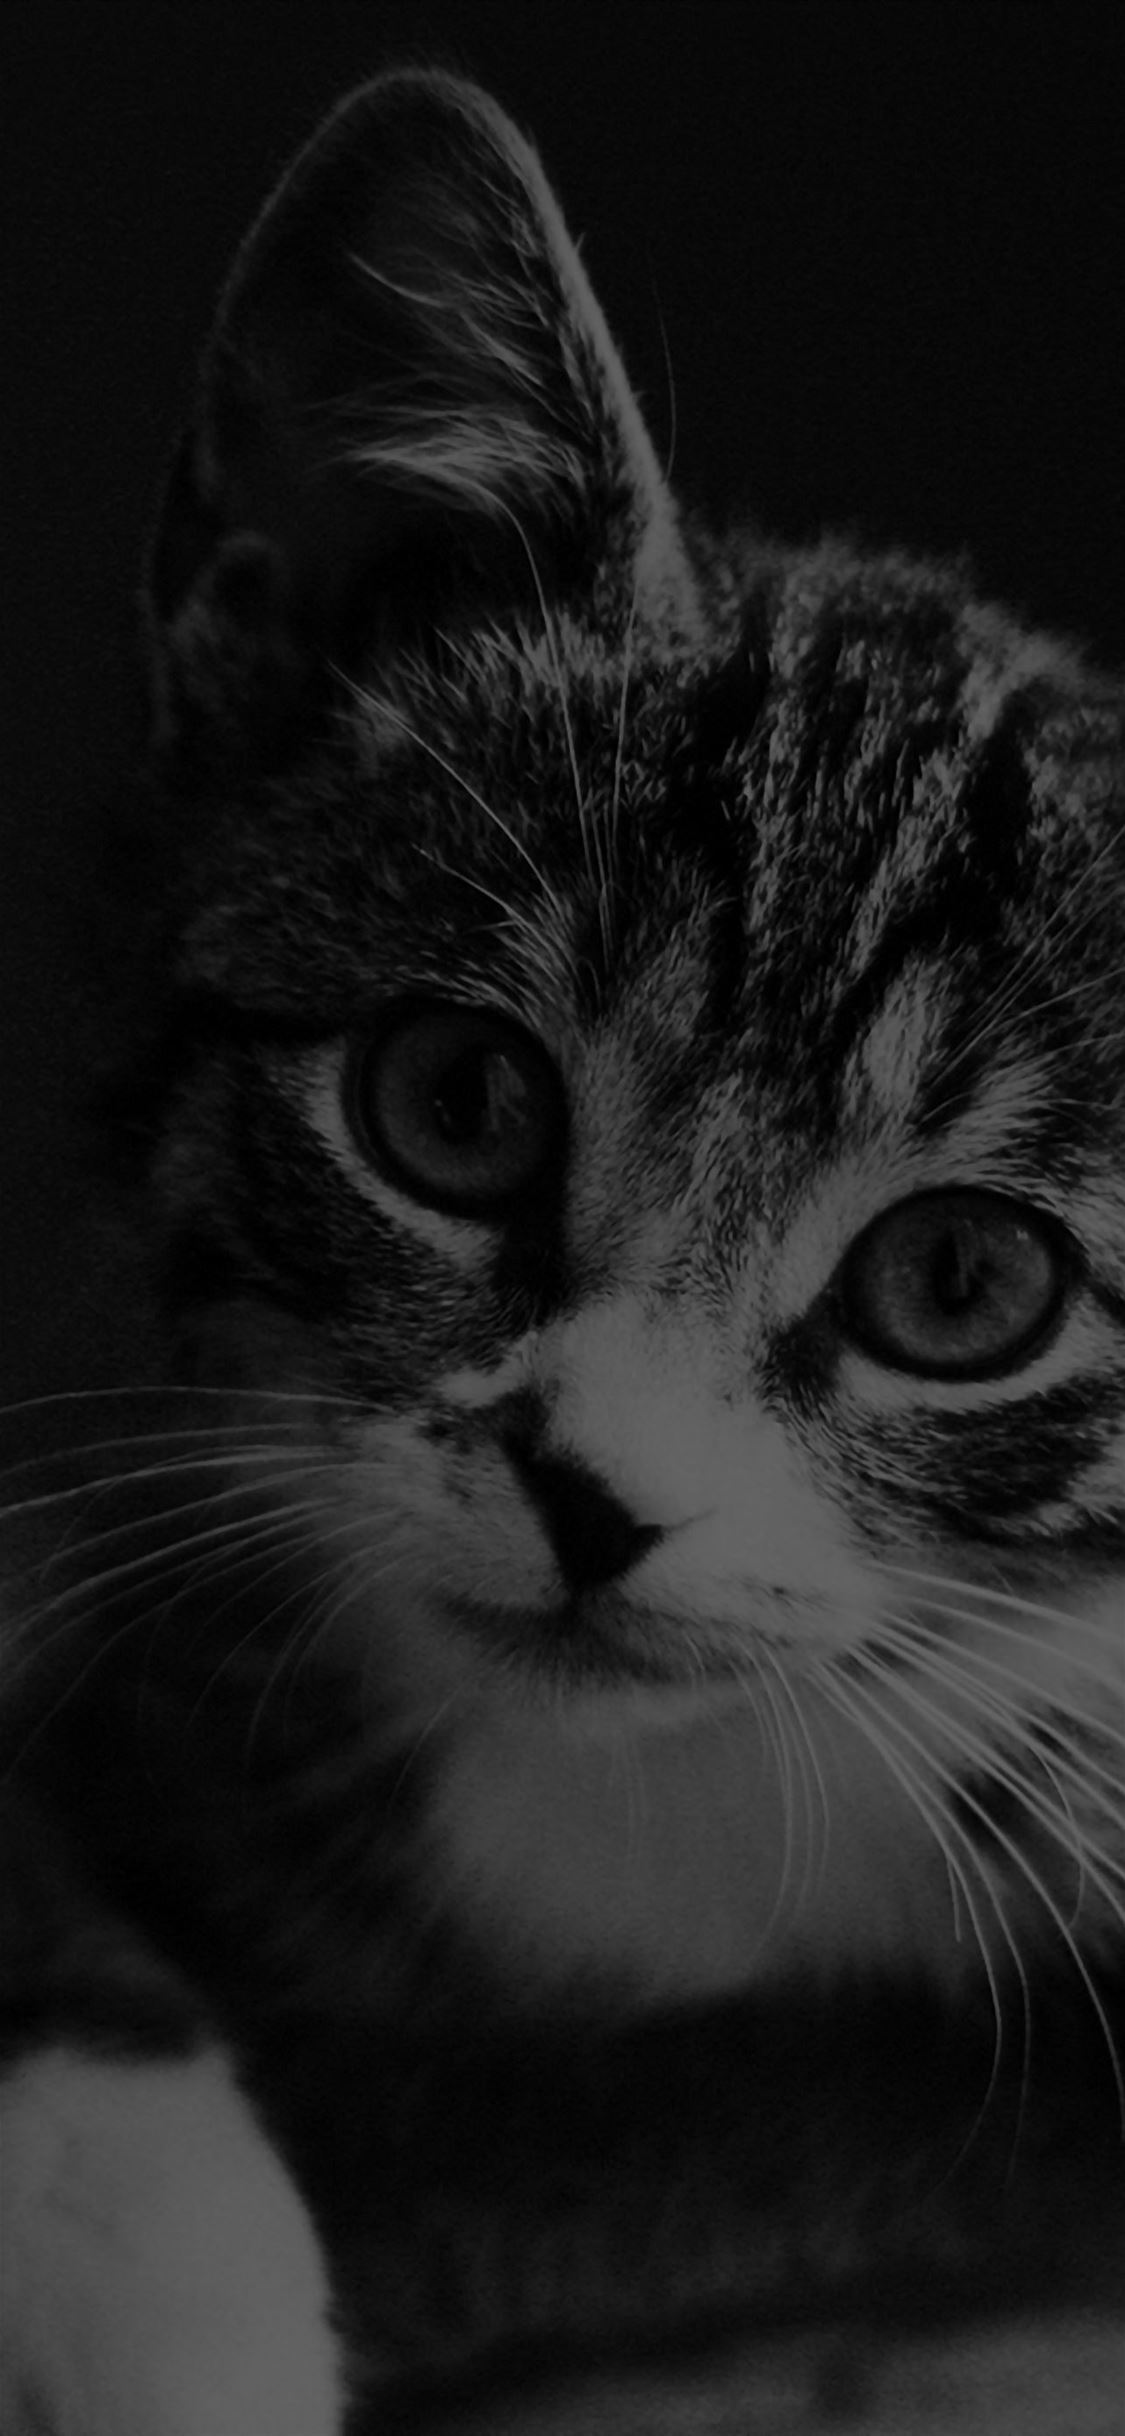 Cute Cat Look Dark Bw Animal Love Nature iPhone wallpaper 